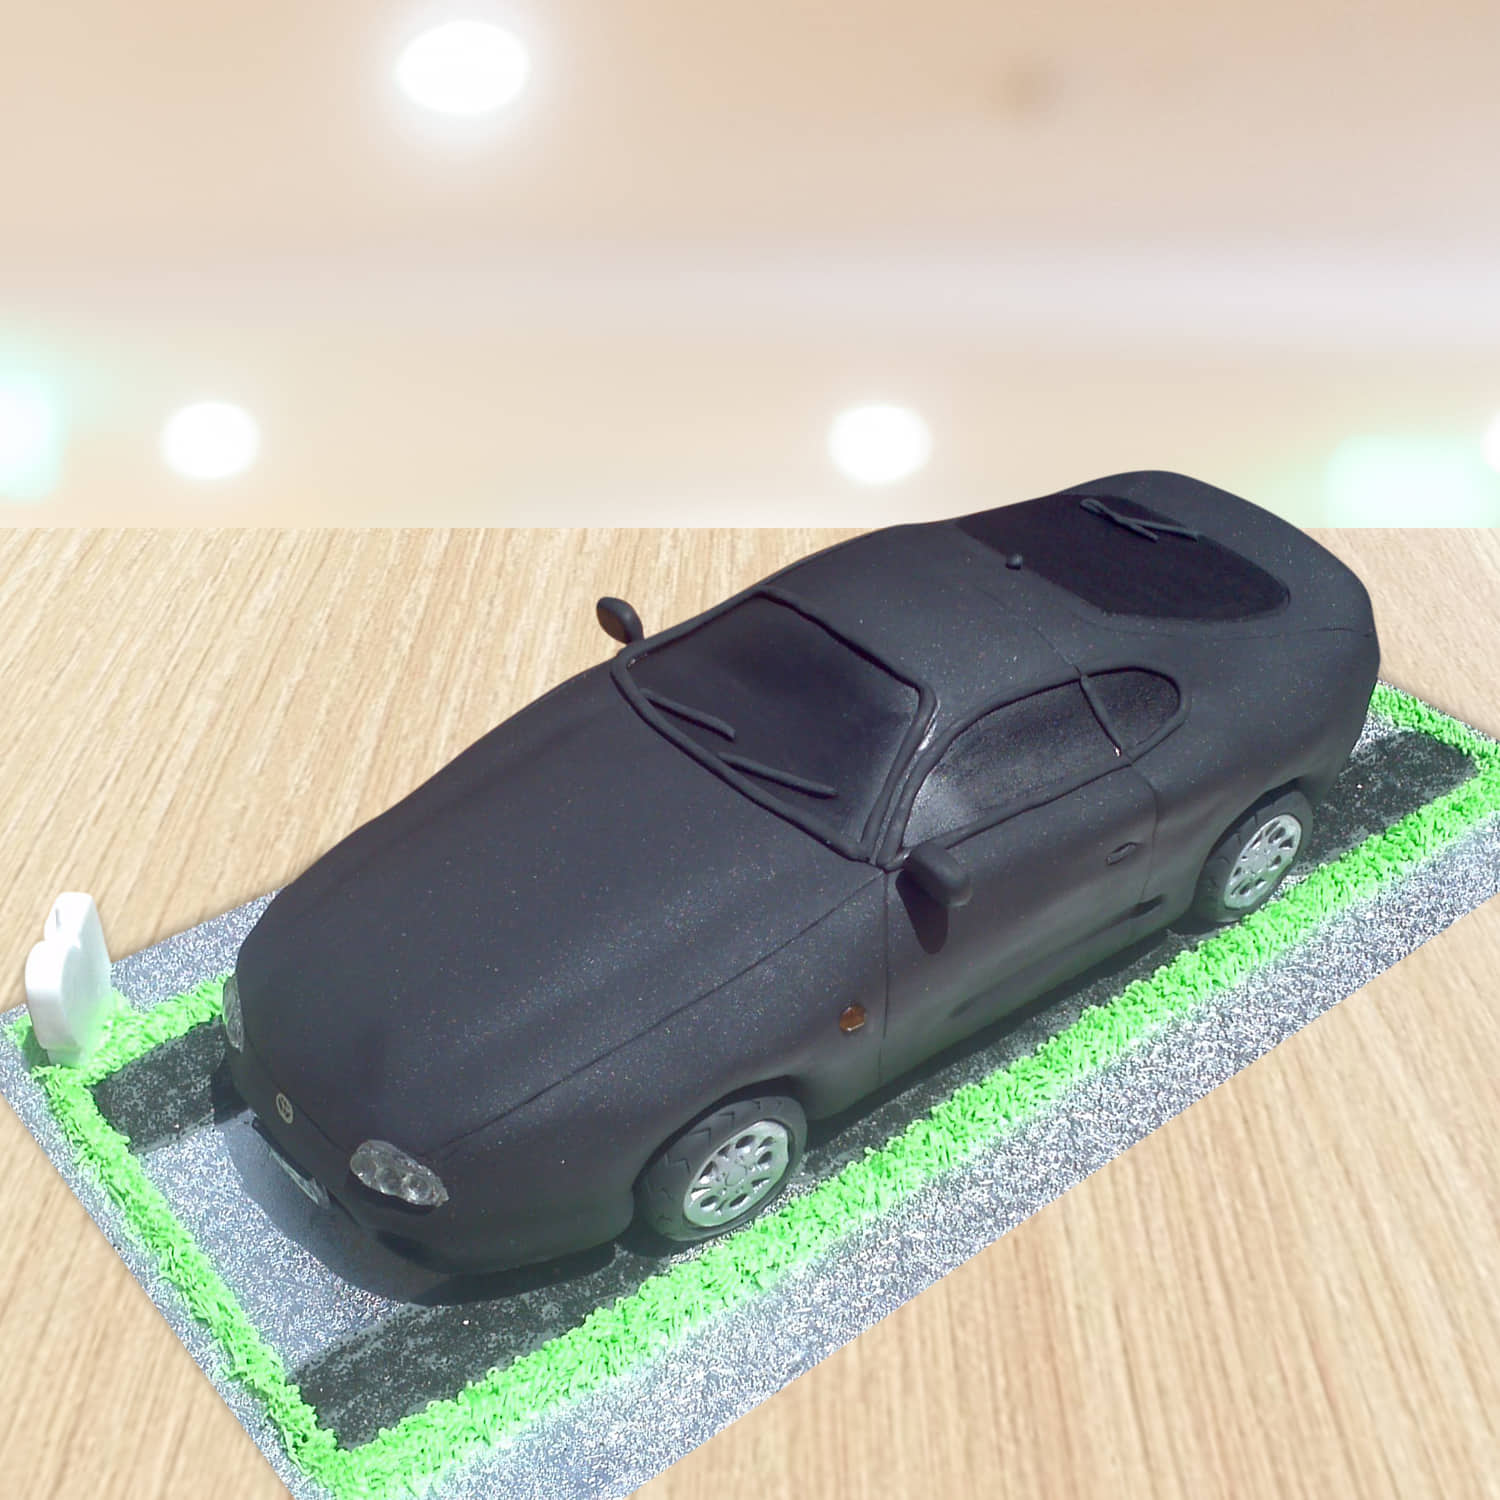 Cakeistry  Hyundai Verna Cake   Facebook